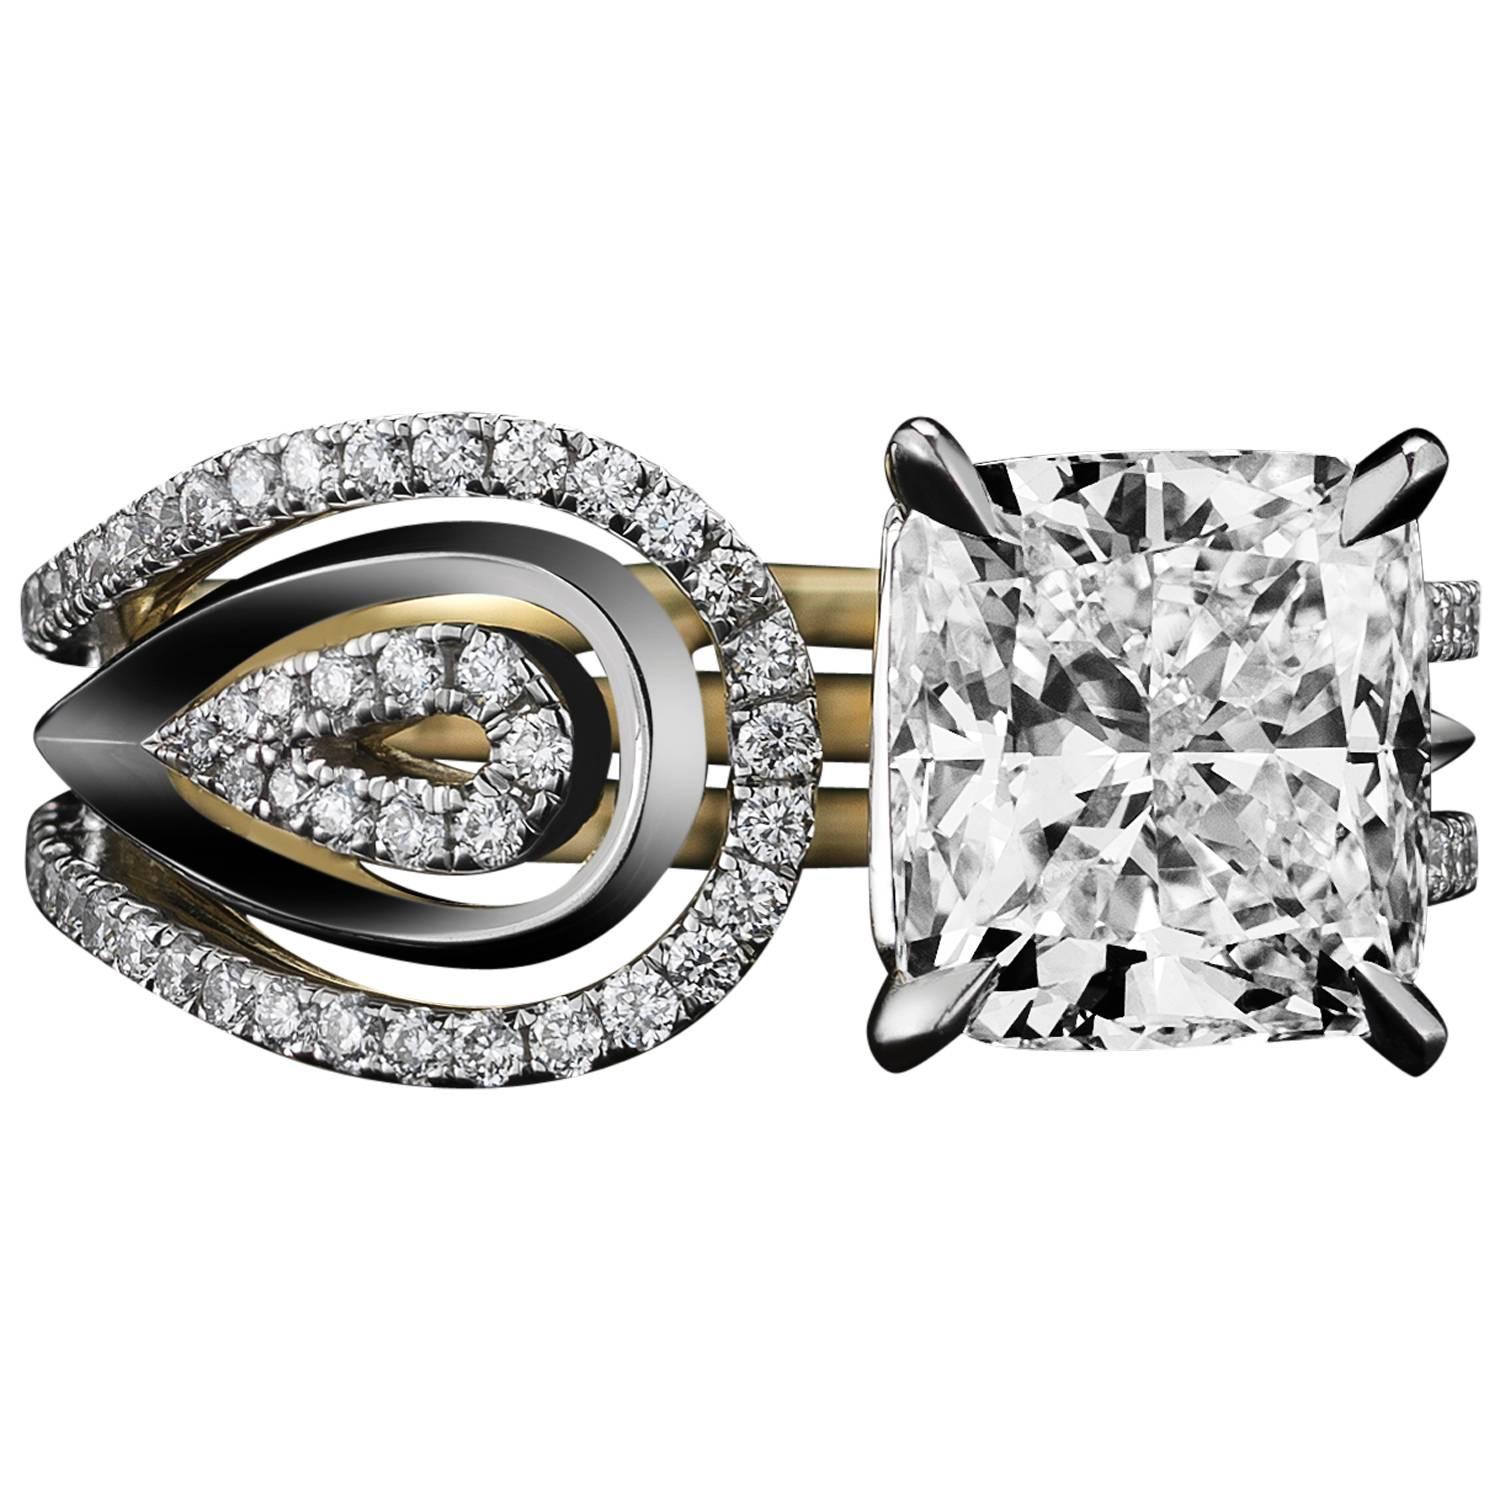 Alexandra Mor Asscher-Cut Diamond Feather Ring , 2.85 G VS1 GIA For Sale